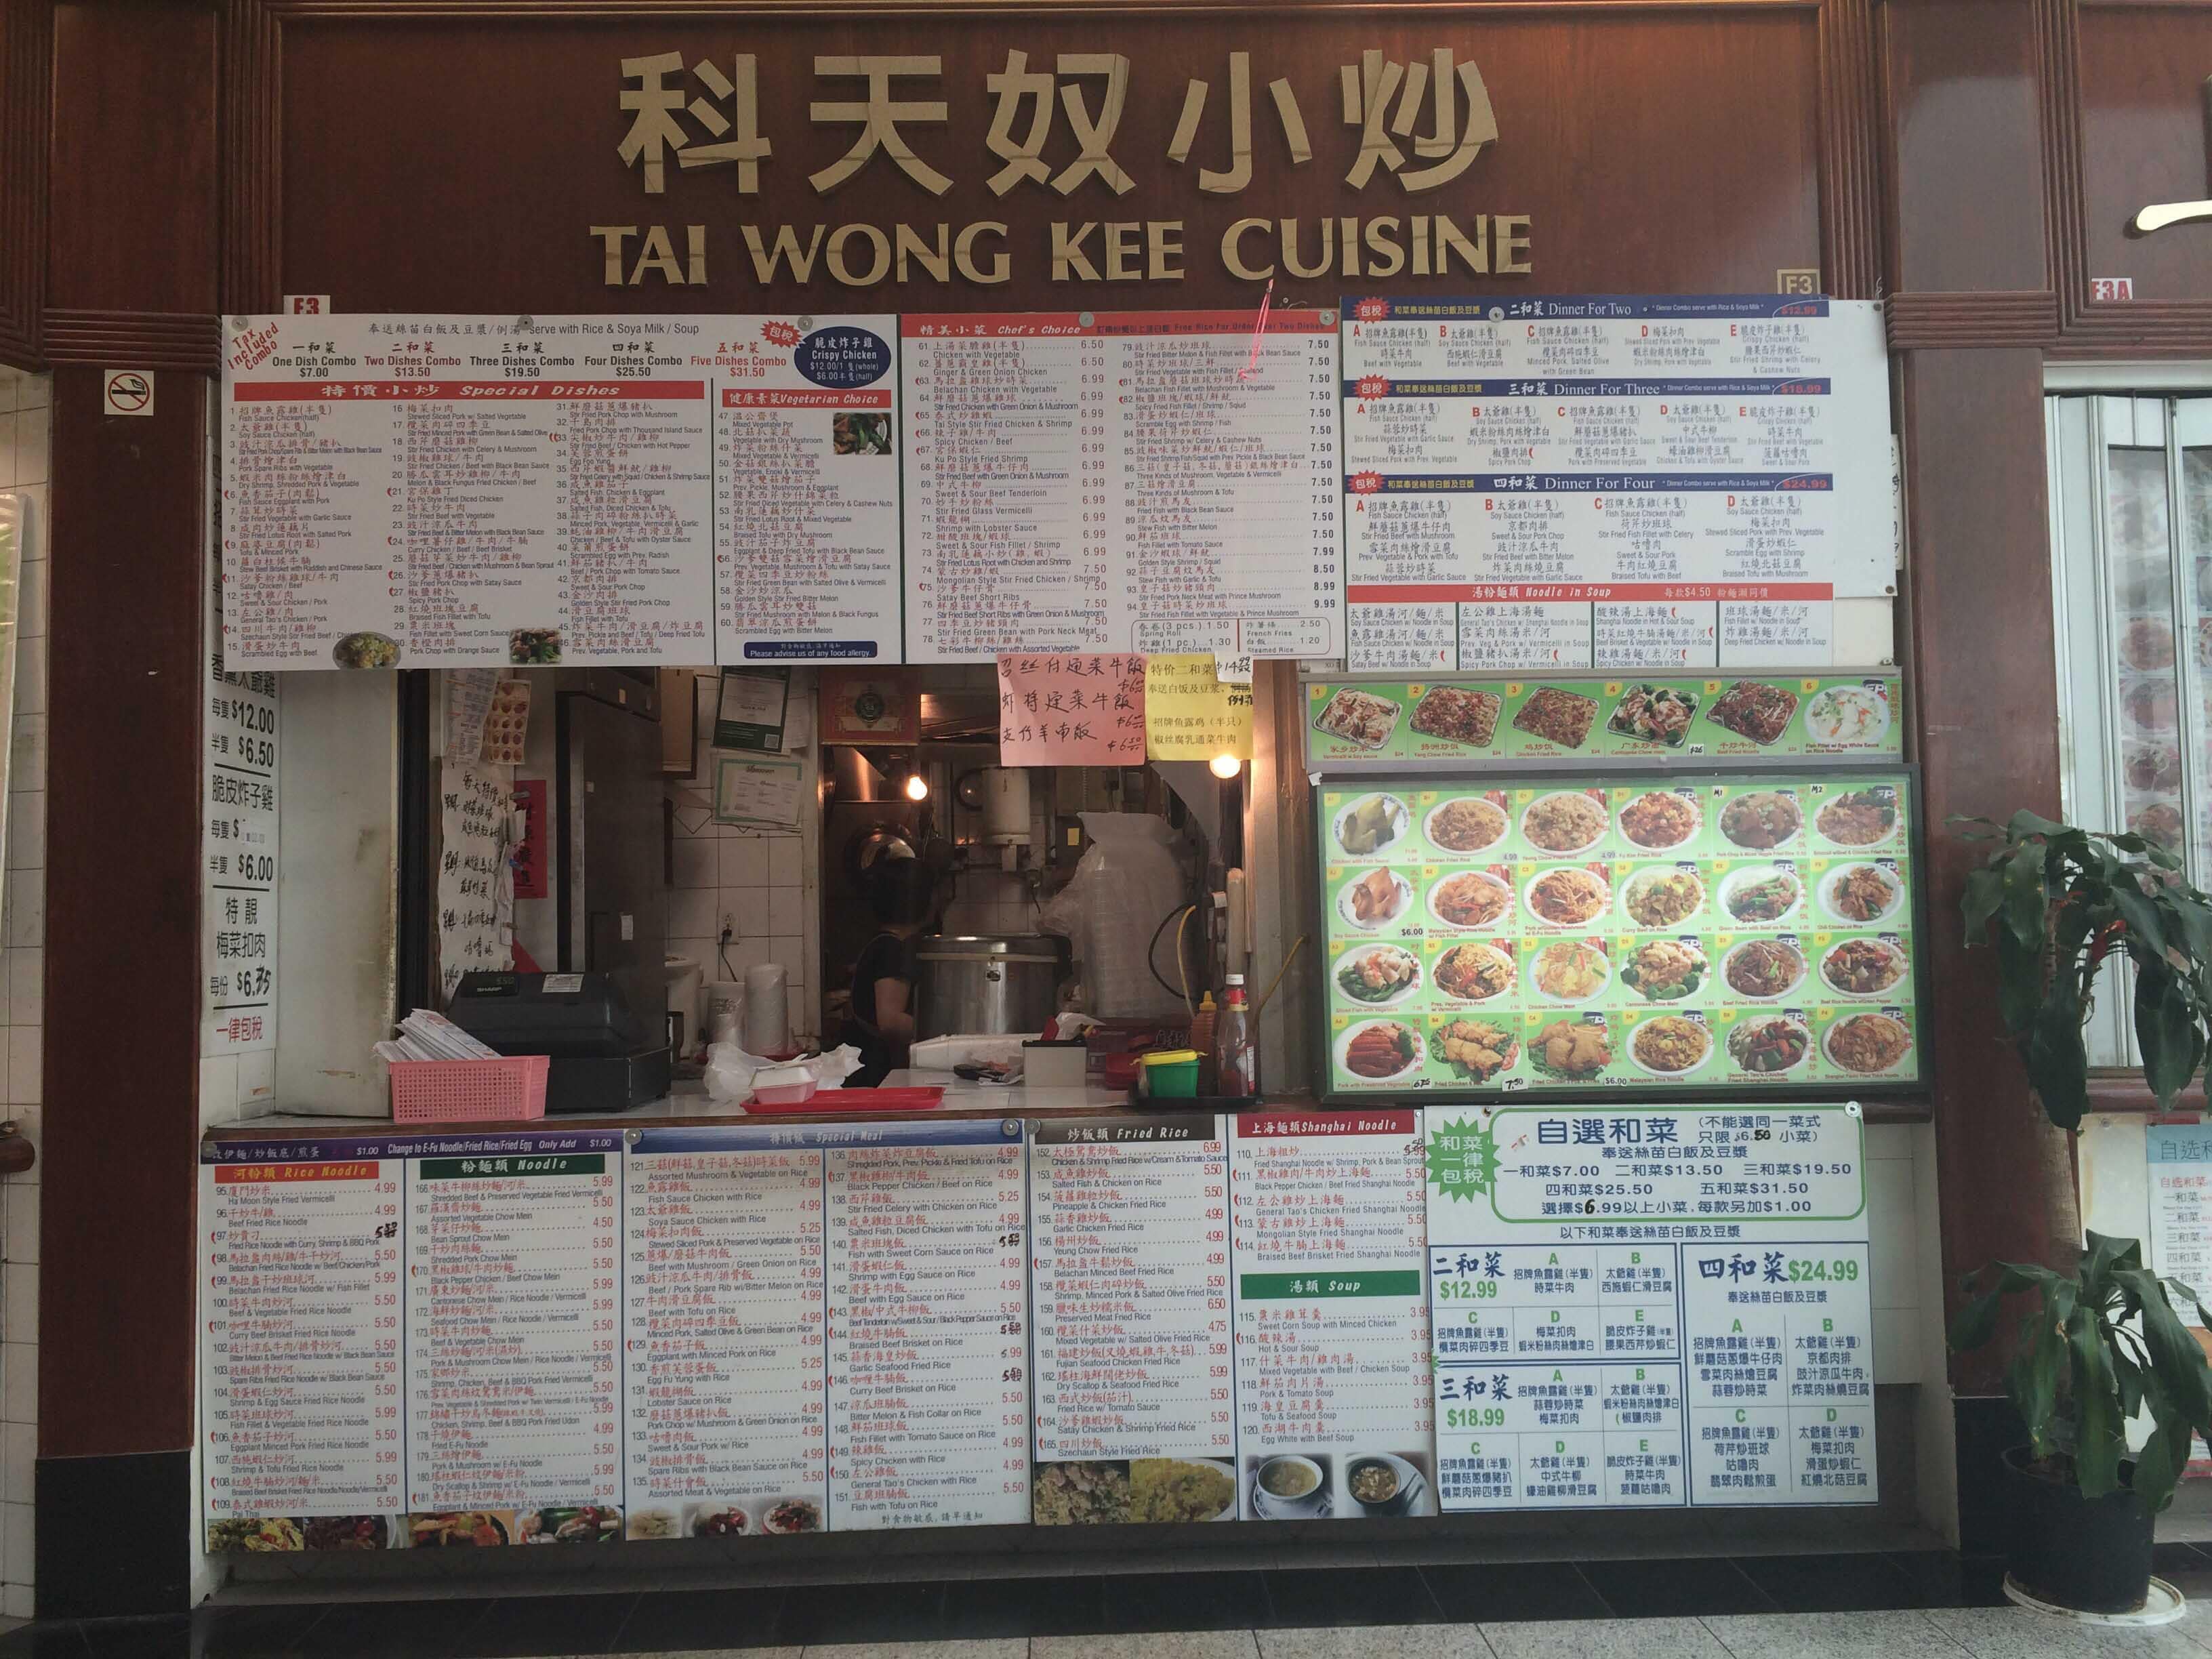 Tai Wong Kee Cuisine